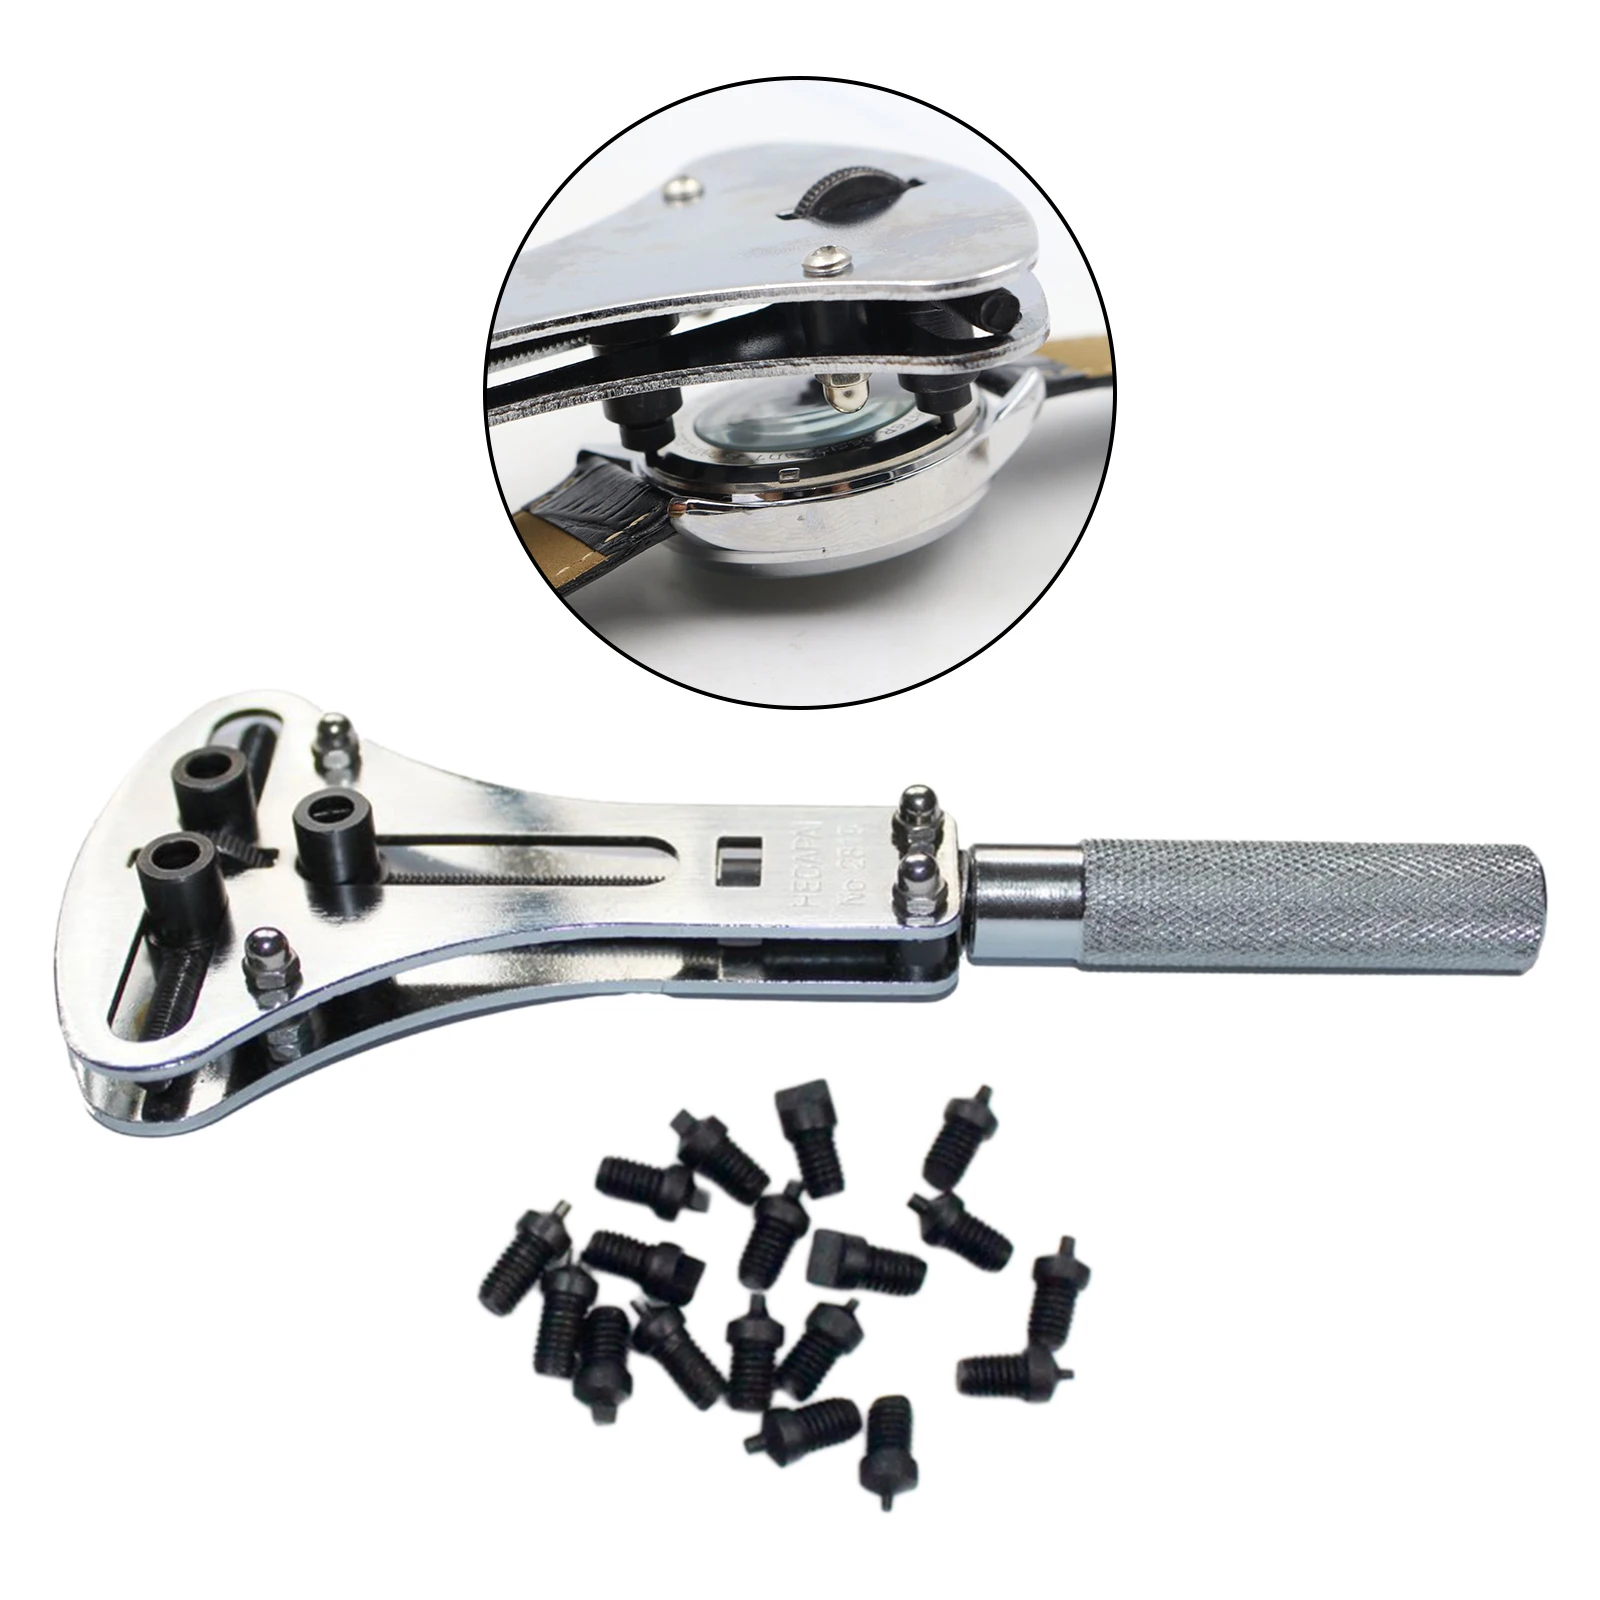 Watch Repair Tools Kit Wrist Watch Case Opener Adjustable Screw Back Remover Wrench Repair Tool Watch Case Opener Wrench